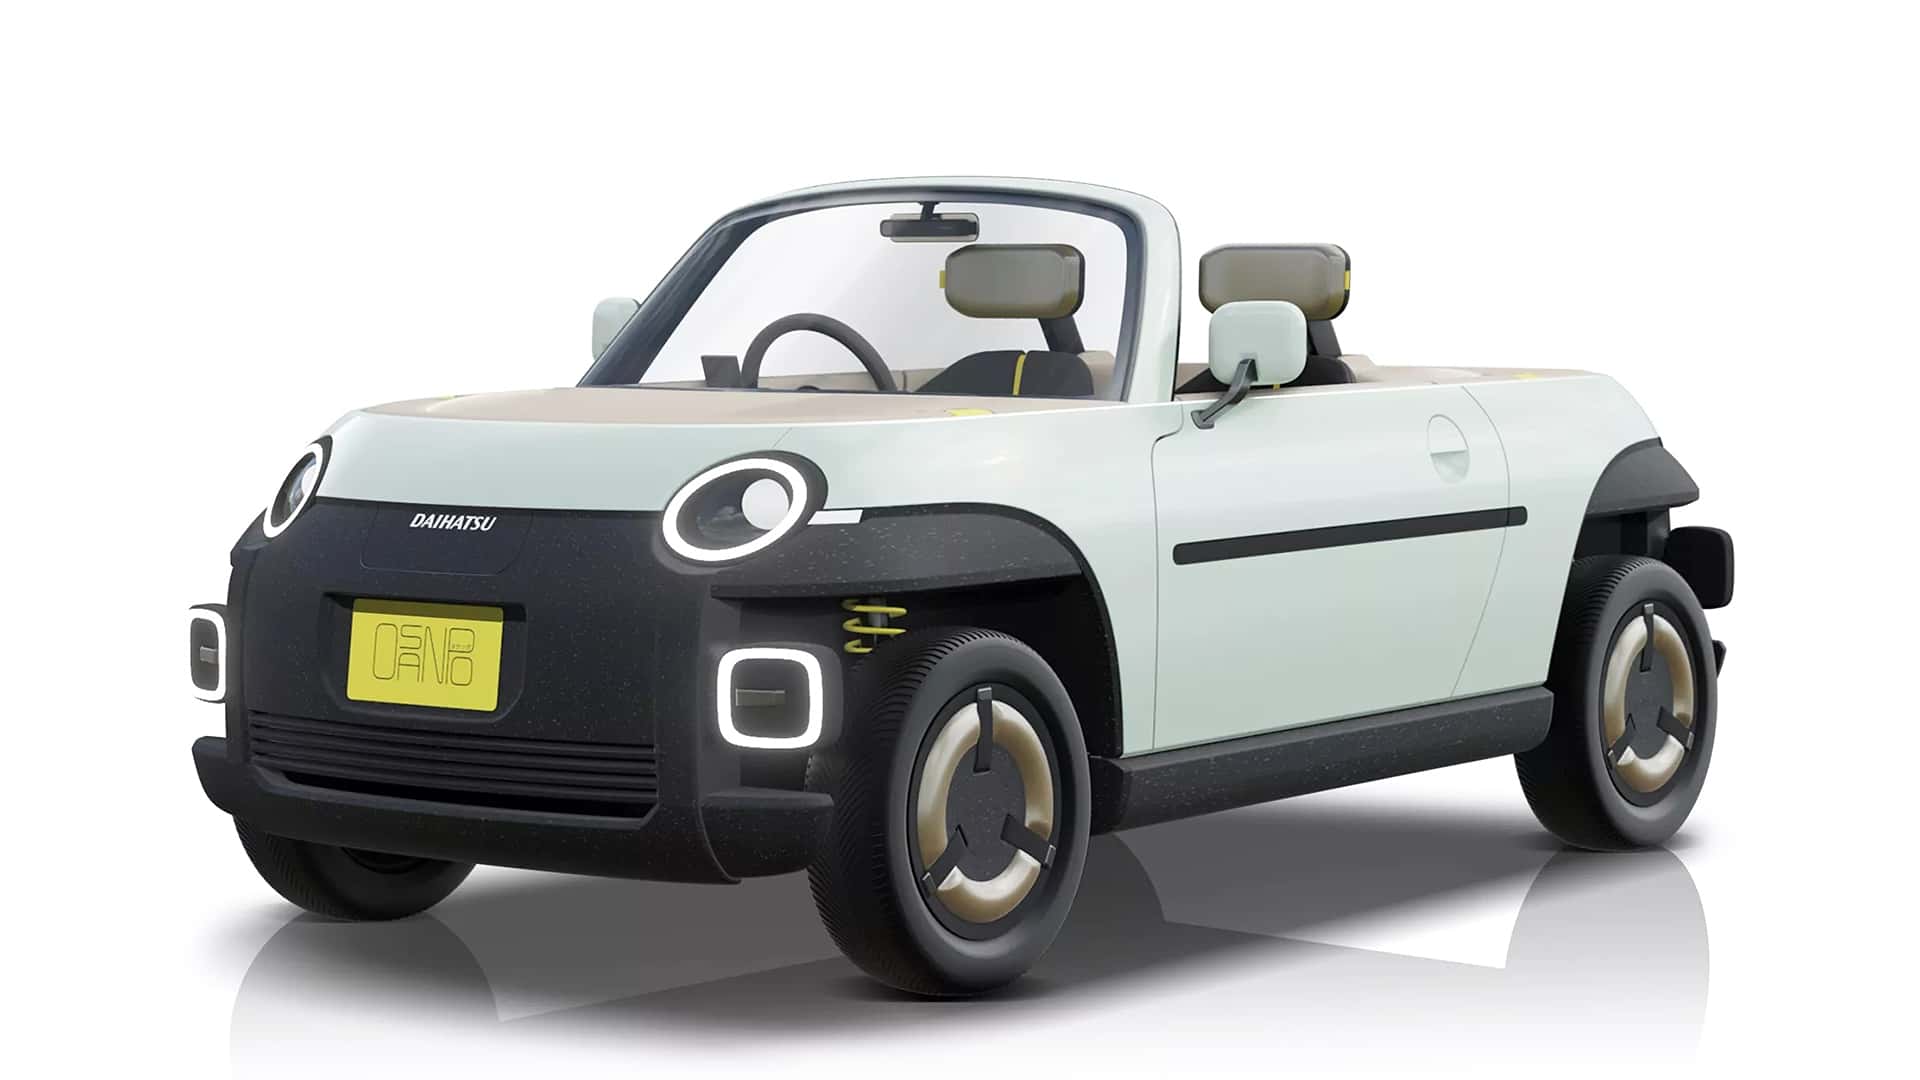 daihatsu set to showcase electric lineup at japan mobility show